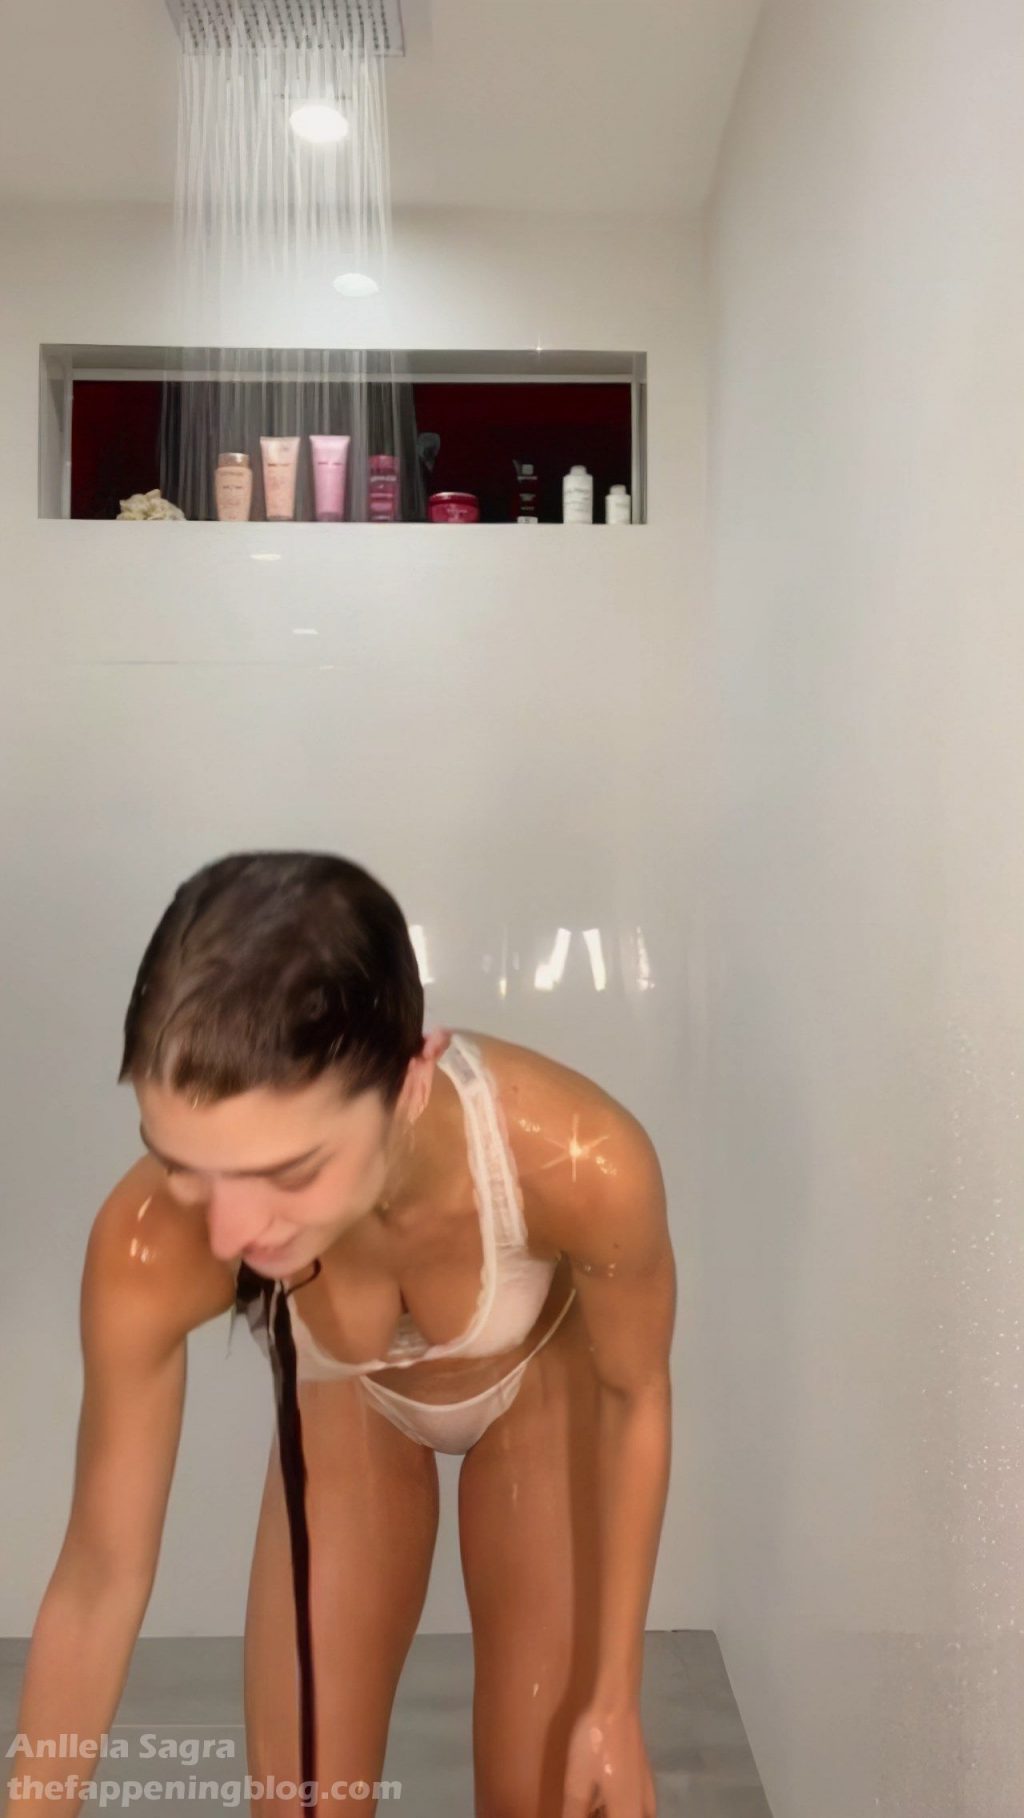 Anllela Sagra Shows Her Wet Tits (6 Pics + Video)